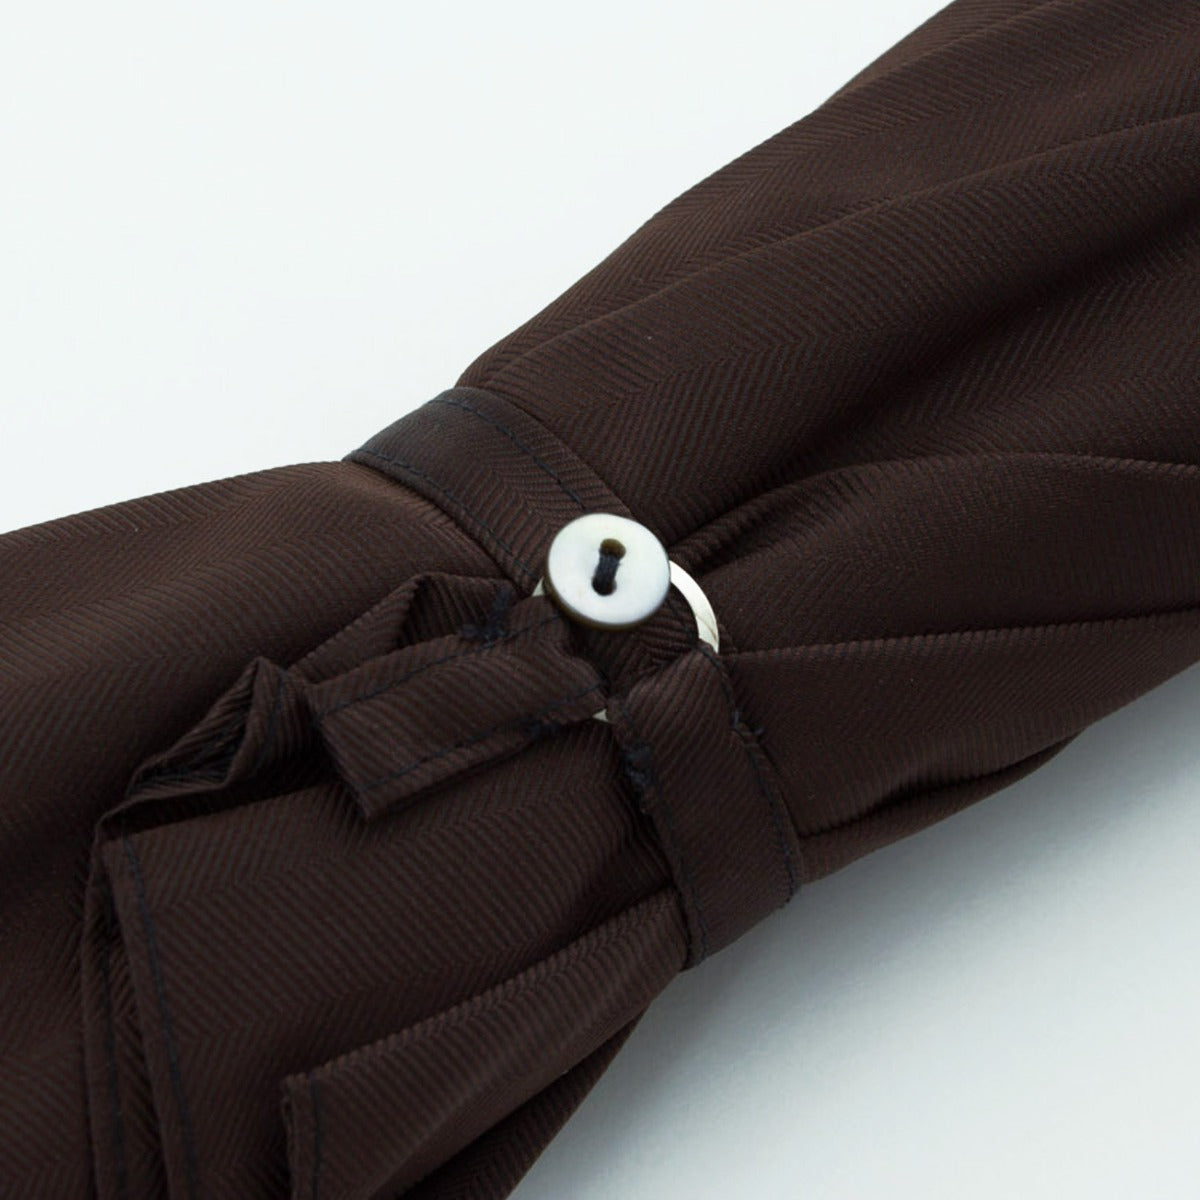 A KirbyAllison.com handcrafted Brown Herringbone Canopy Travel Umbrella Woven Leather Handle.